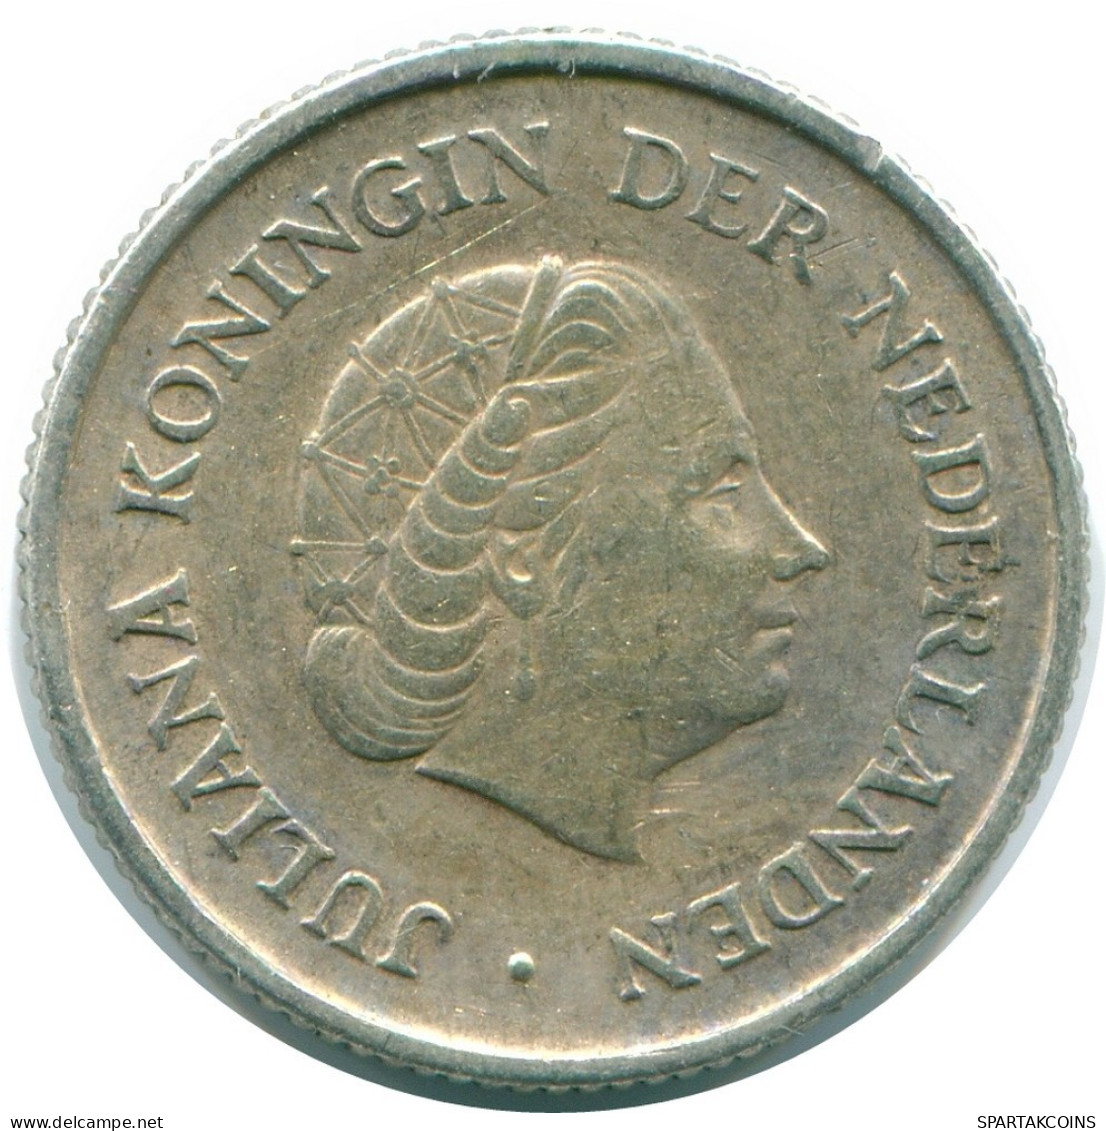 1/4 GULDEN 1965 ANTILLAS NEERLANDESAS PLATA Colonial Moneda #NL11427.4.E.A - Netherlands Antilles